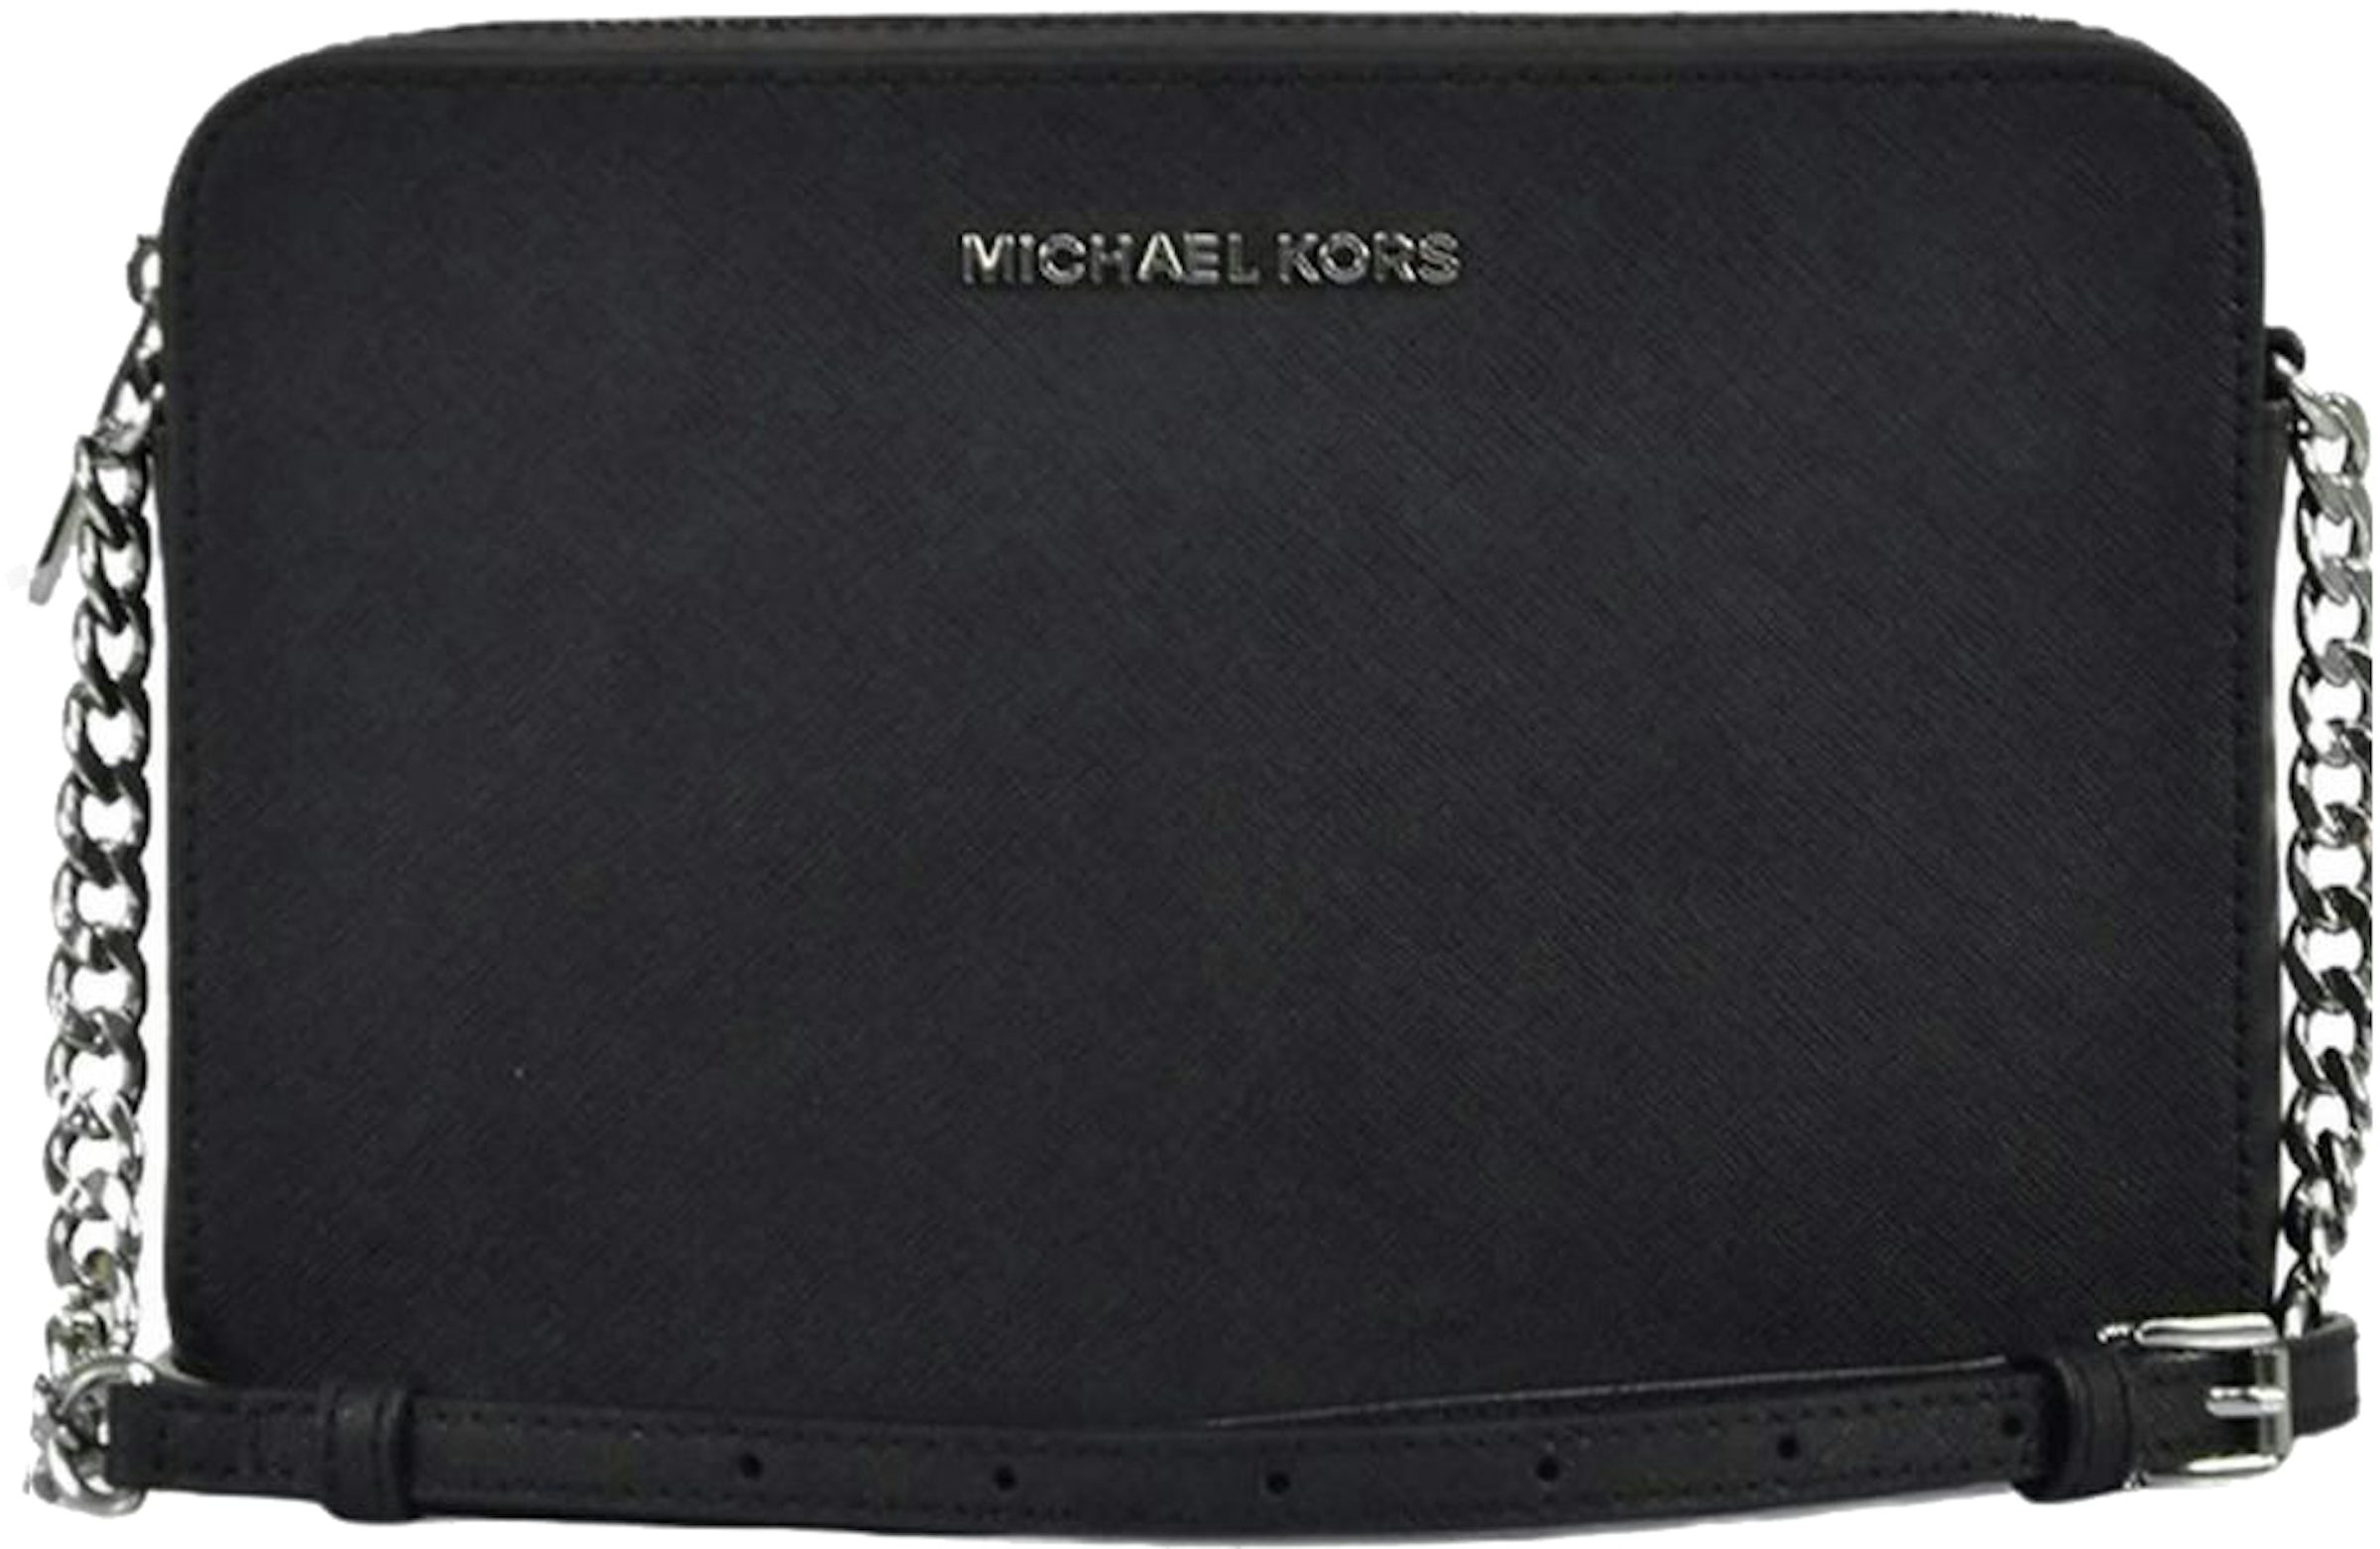 Michael Kors Jet Set Large East West Saffiano Leather Crossbody Bag